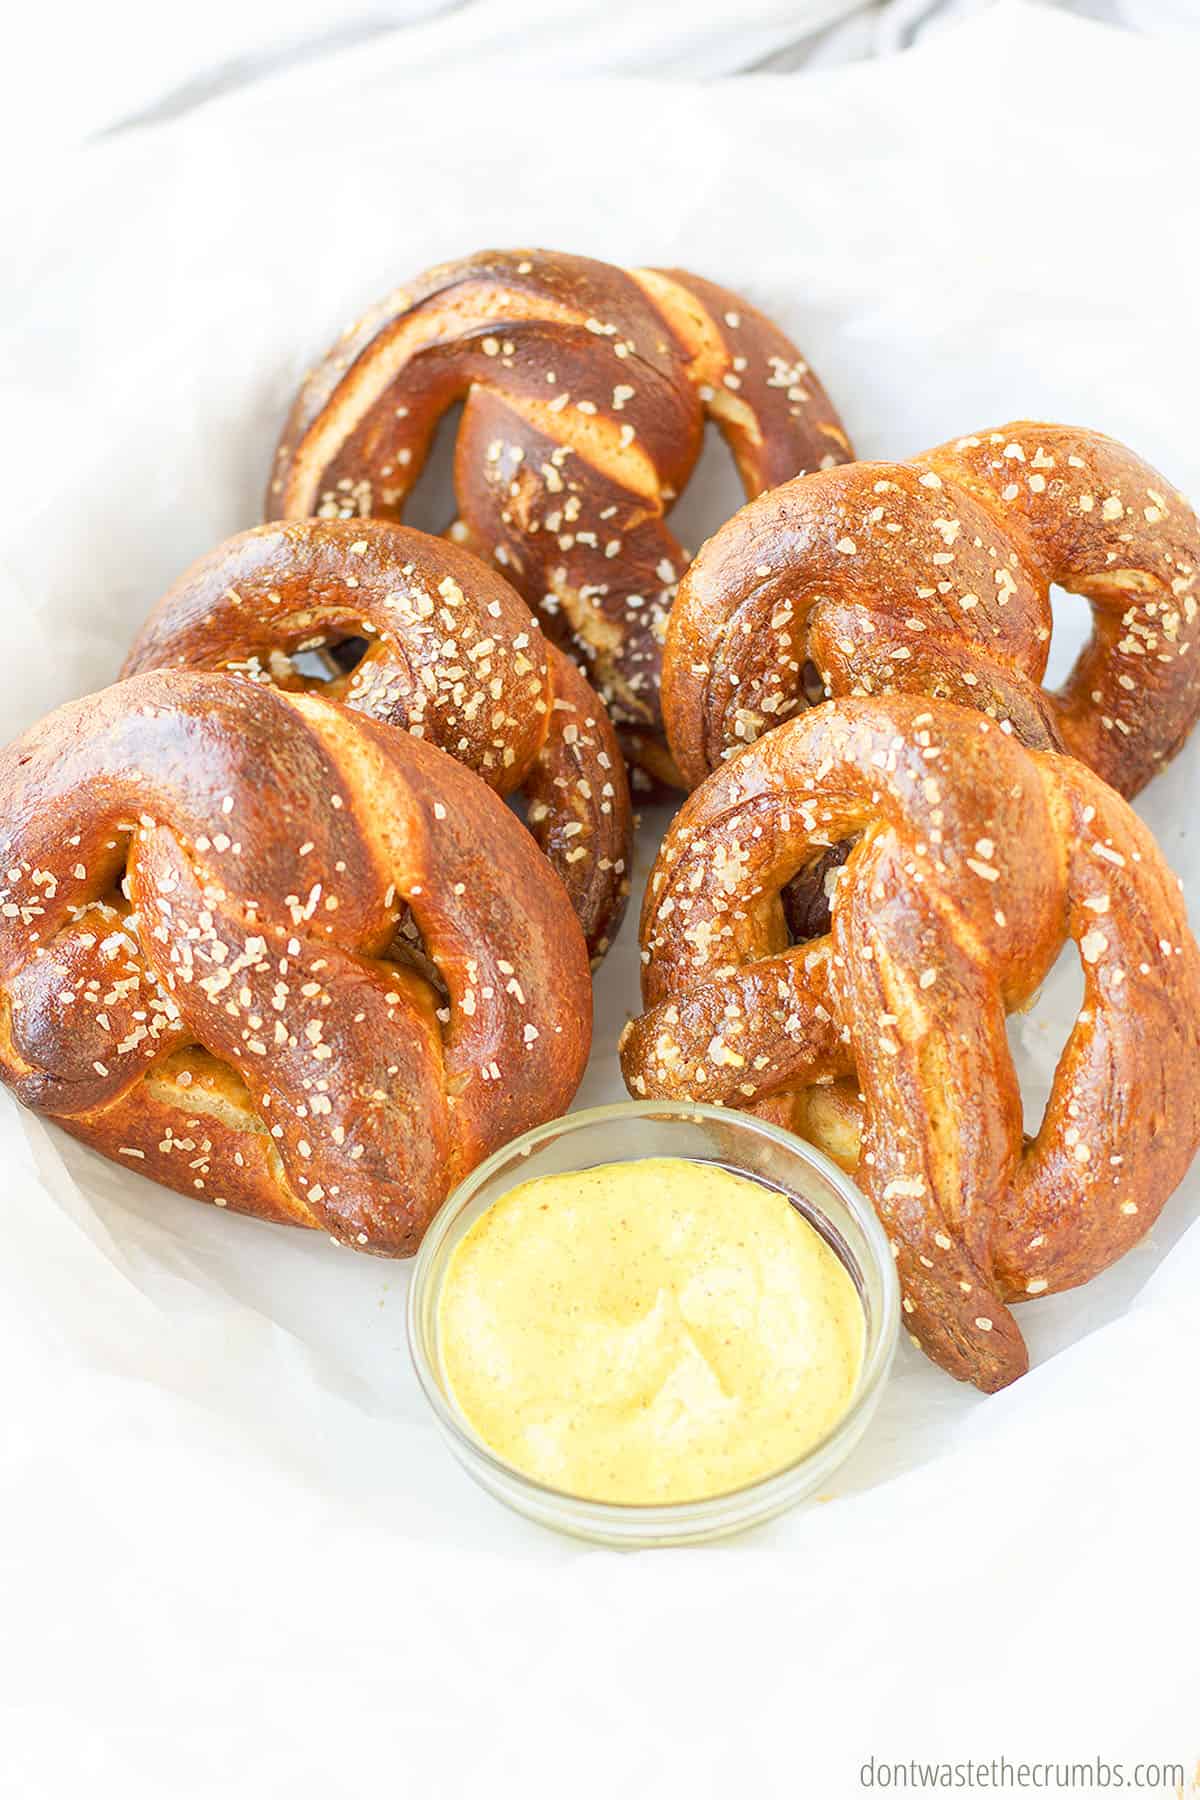 Enjoy your homemade soft pretzels with a mustard dip!